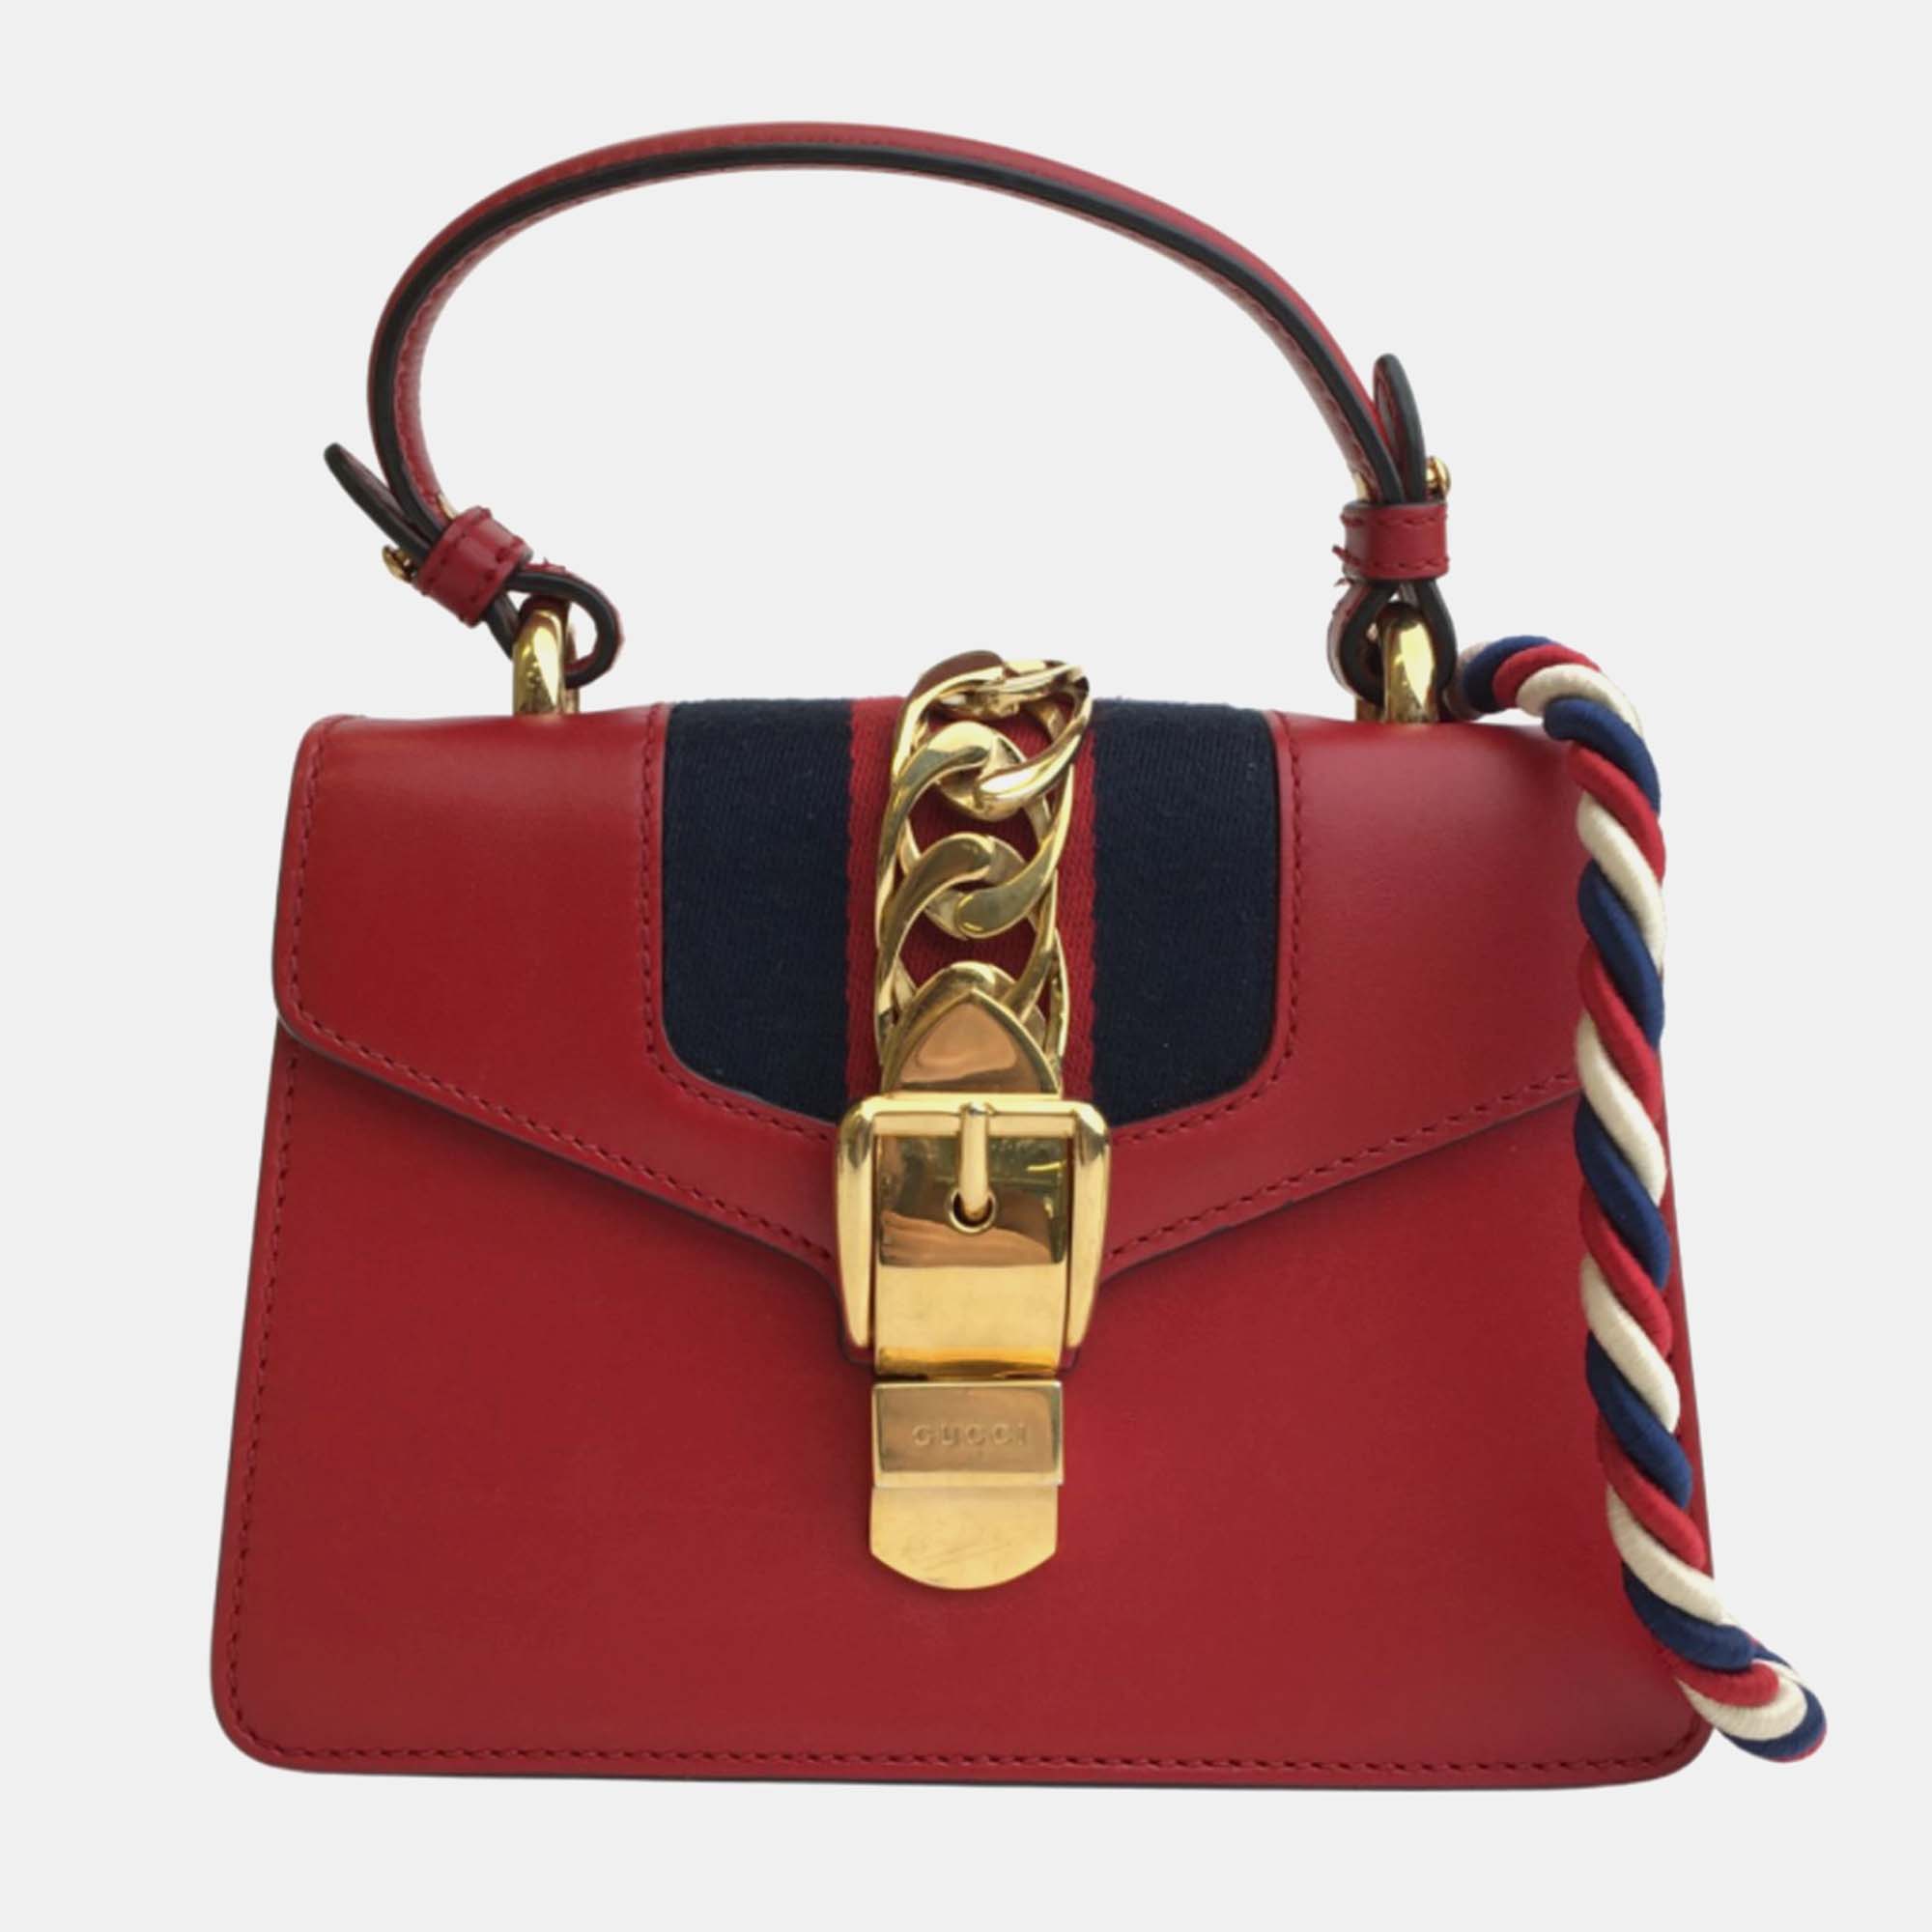 Gucci red leather mini sylvie shoulder bag